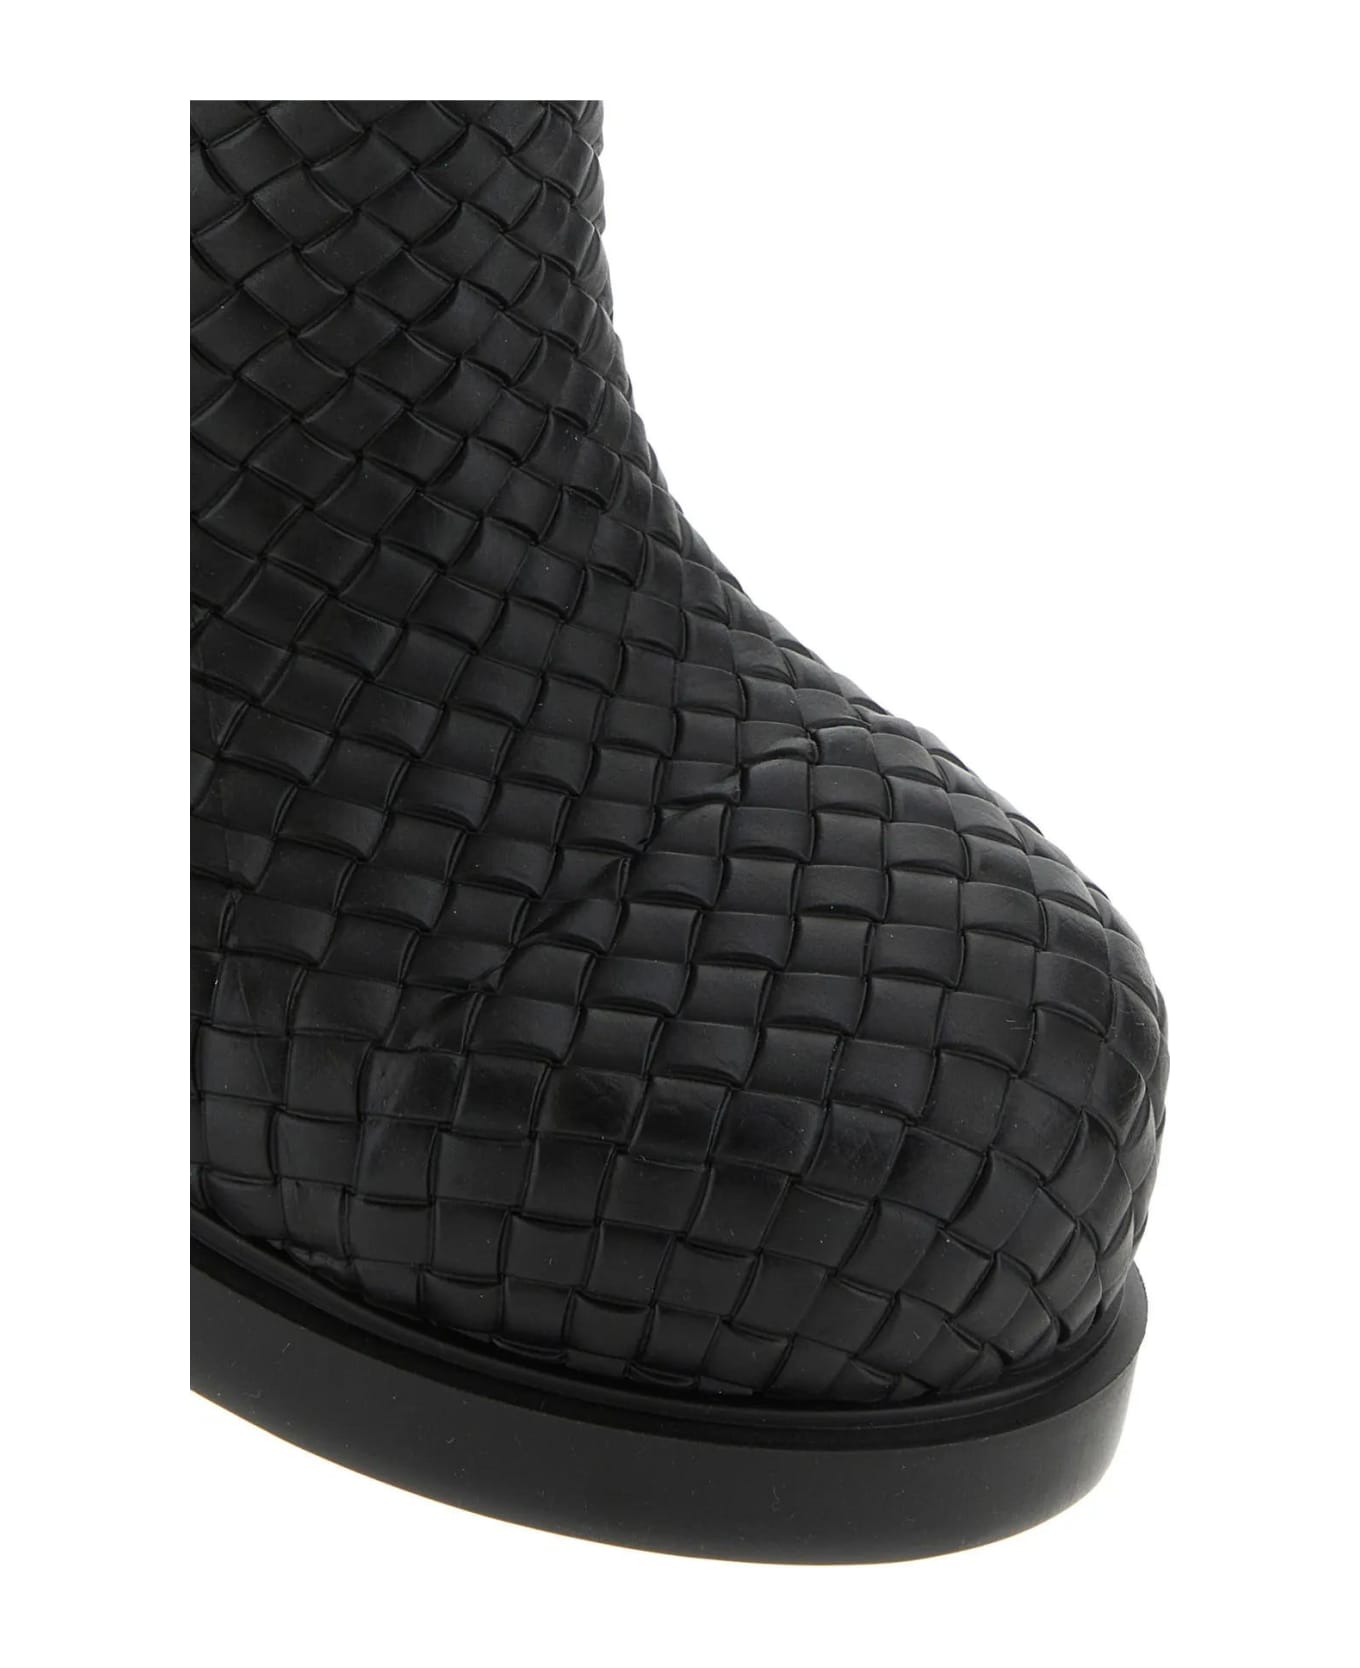 Bottega Veneta Fireman Ankle Boots - black ブーツ